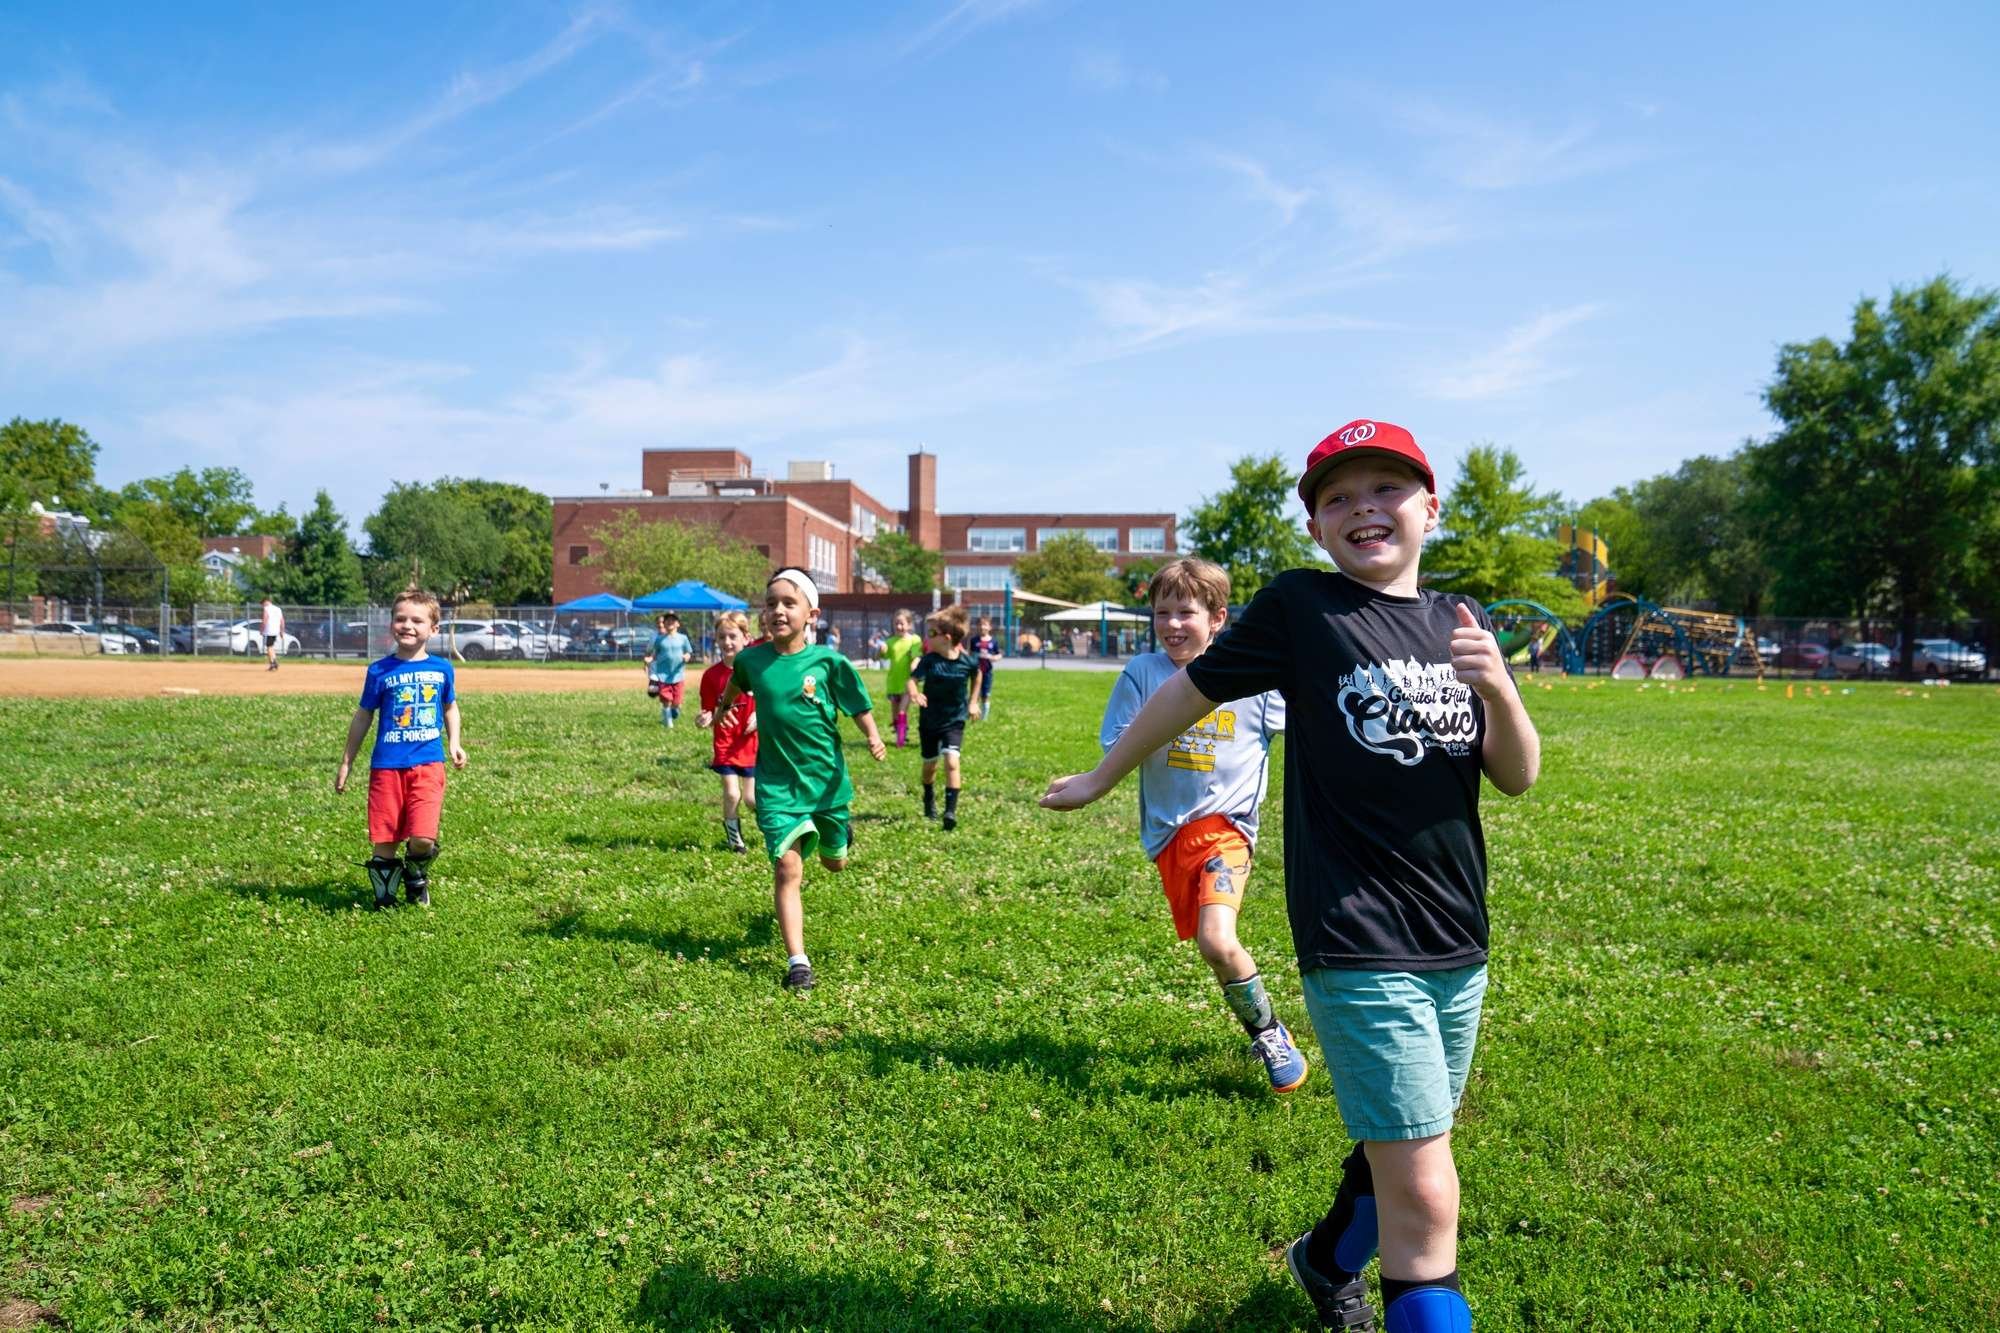 Dc-way-soccer-club-for-kids-in-washington-dc-summer-camp-at-tyler-elementary-school- 0261.jpg